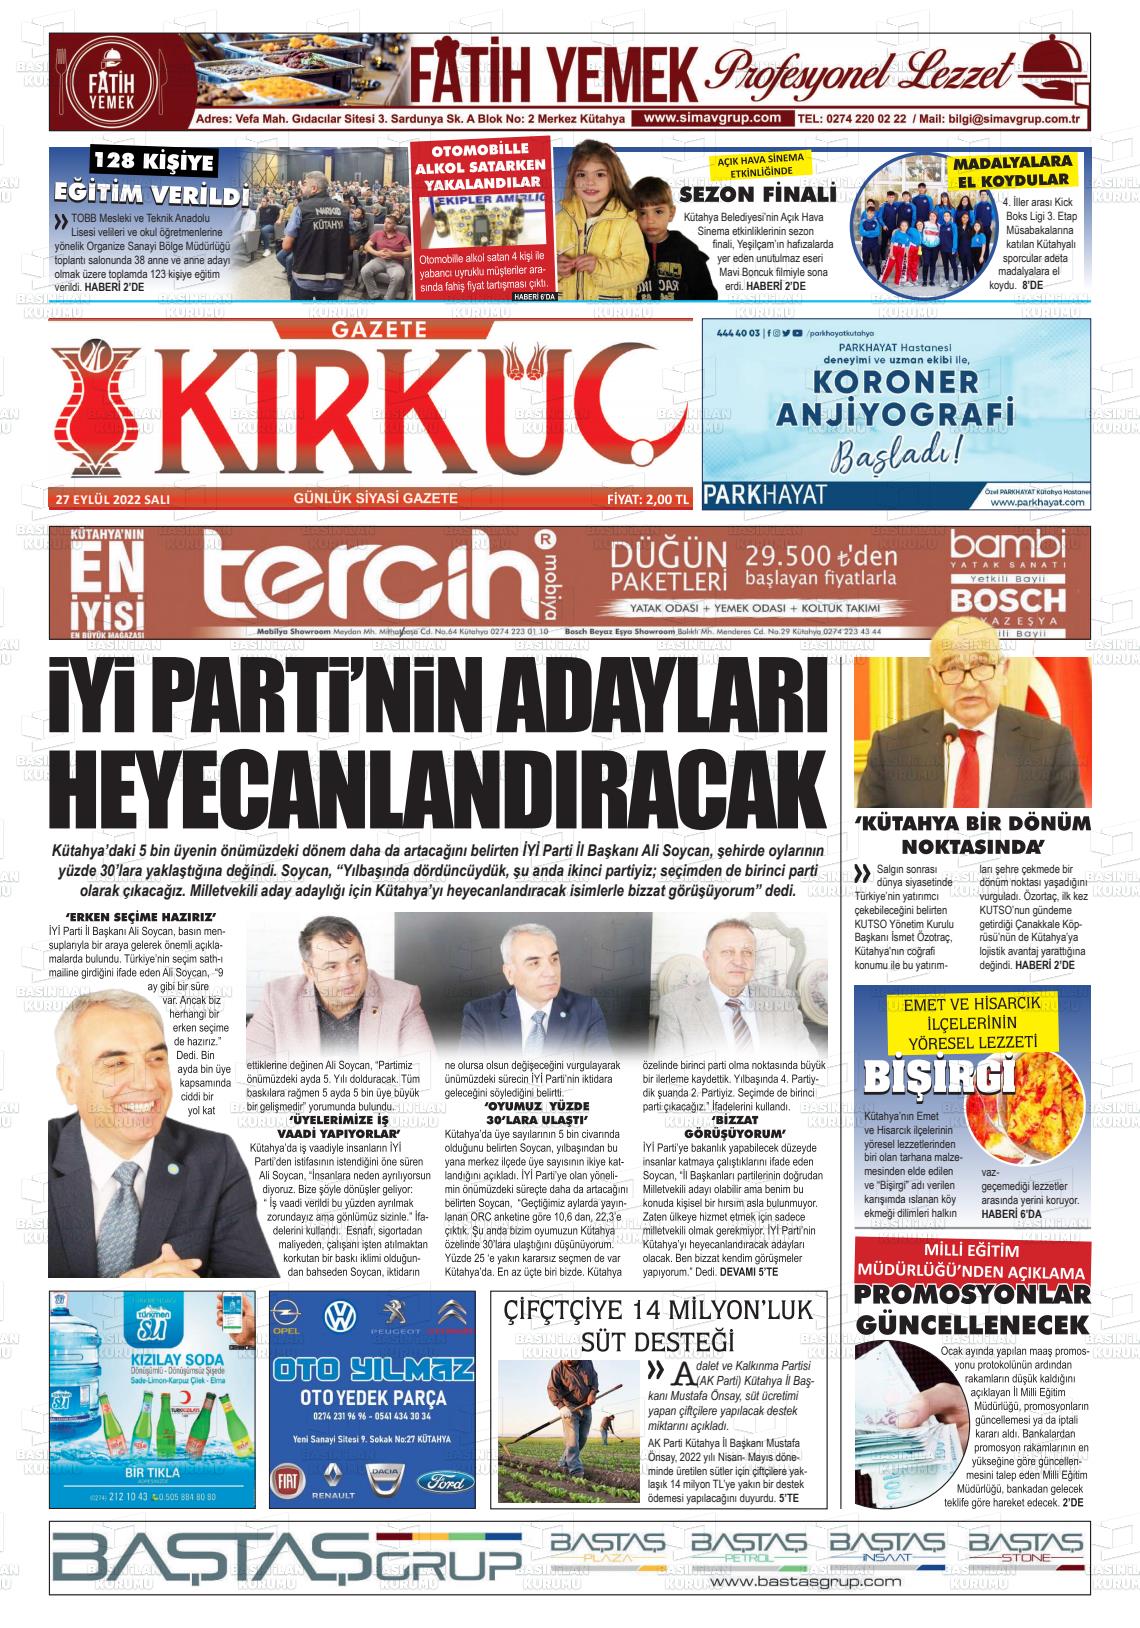 27 Eylül 2022 Gazete Kırküç Gazete Manşeti